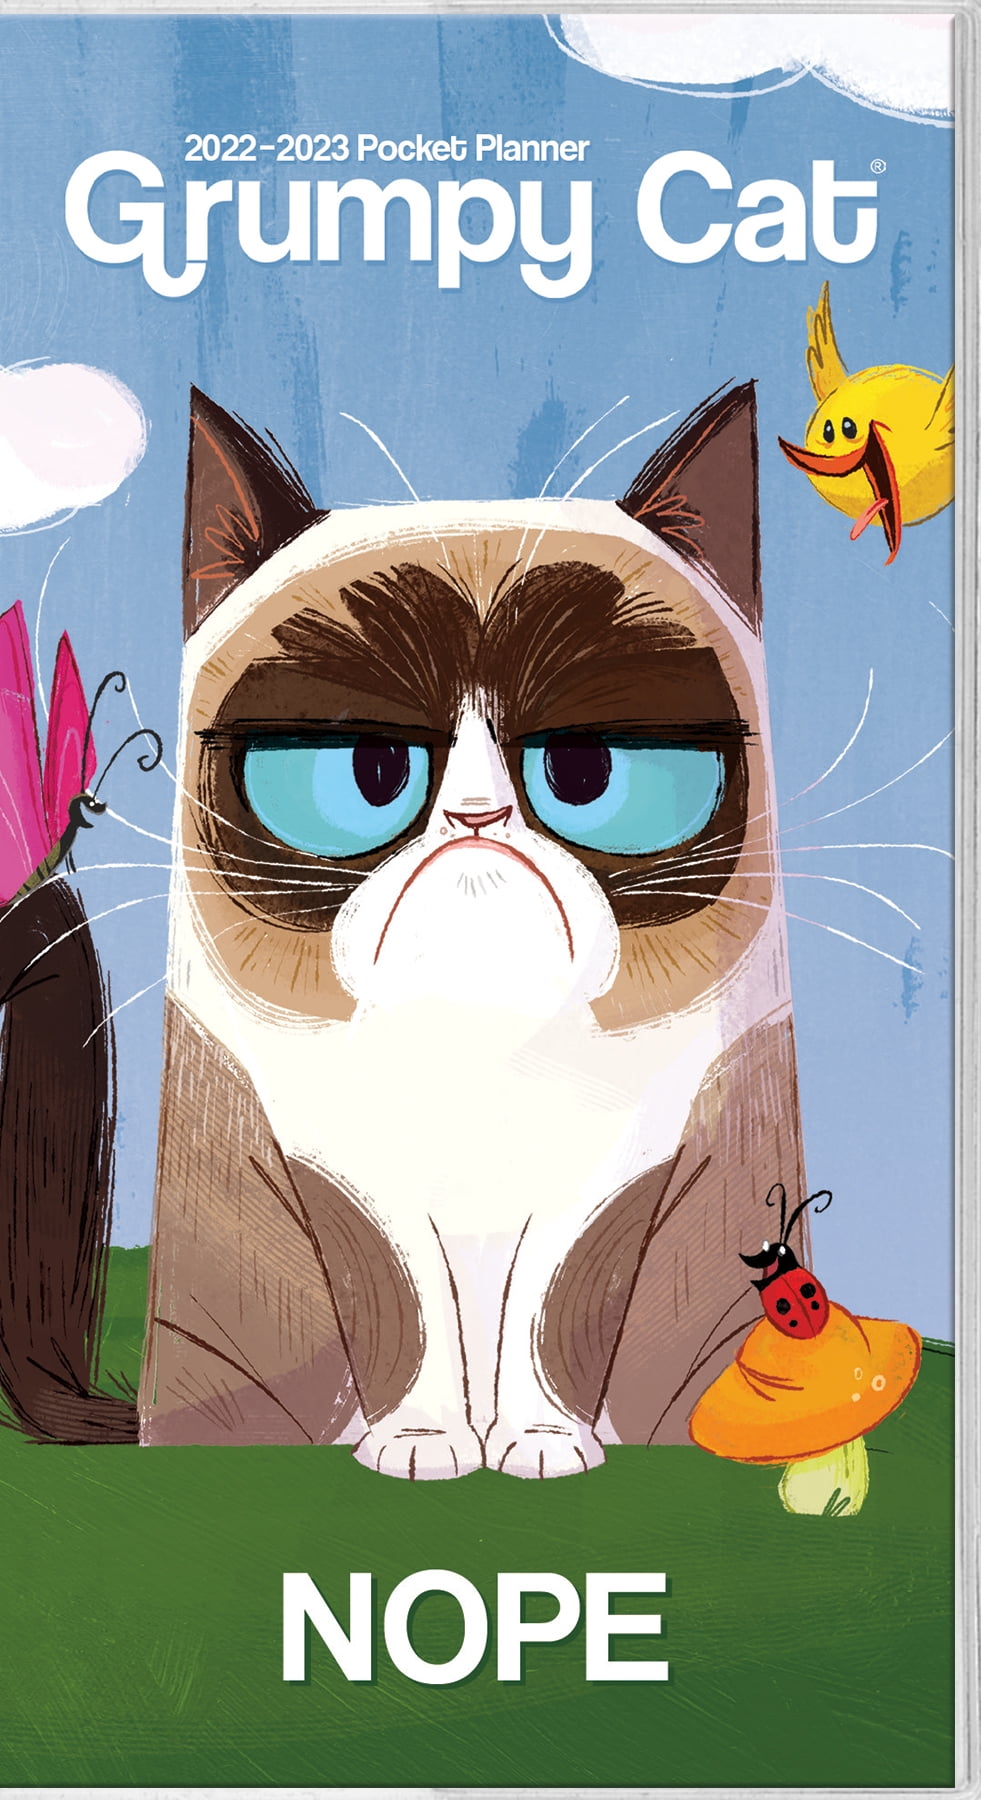 grumpy-cat-calendar-2020-lim-kowkin-flickr